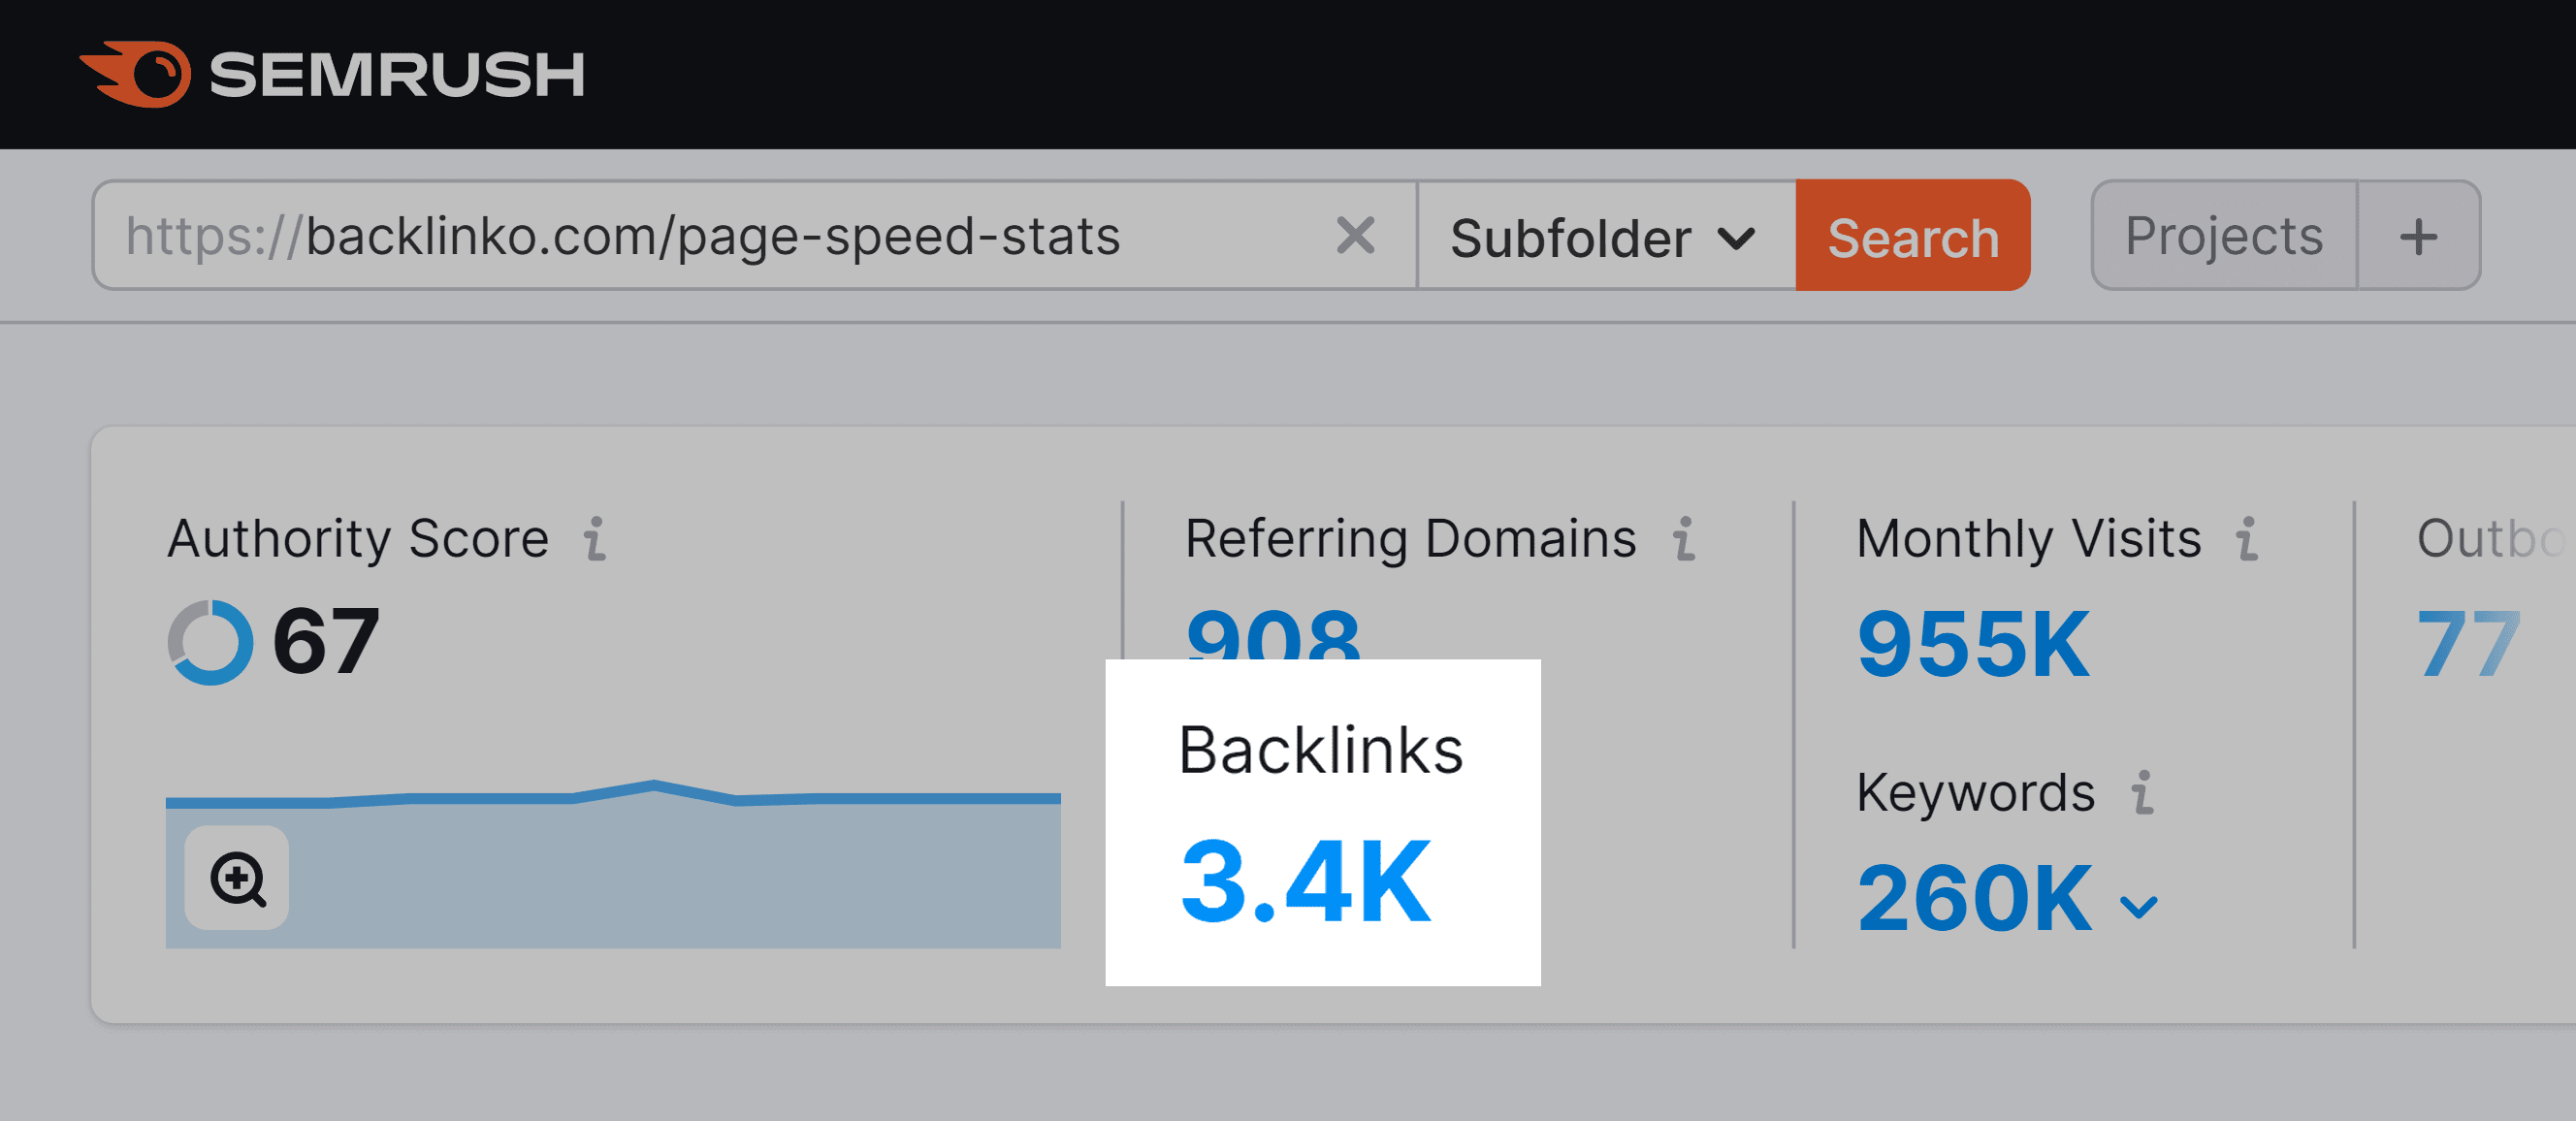 Backlinko – Page speed stats – Backlinks